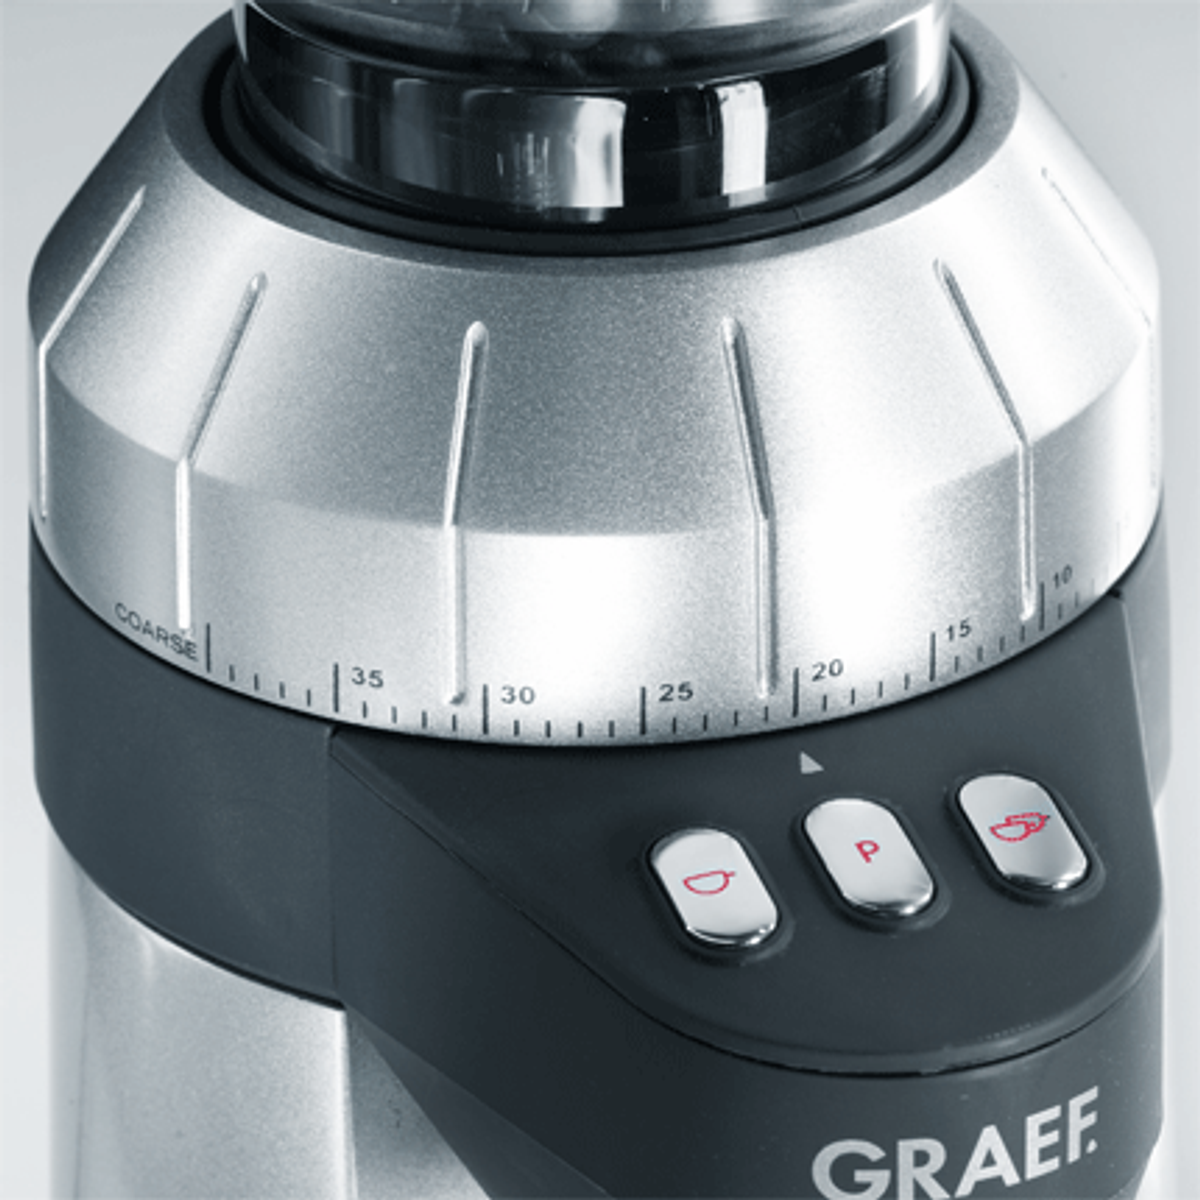 GRAEF CM 900 KAFFEEMÜHLE Silber Watt, (128 Edelstahl-Kegelmahlwerk) Kaffeemühle EU